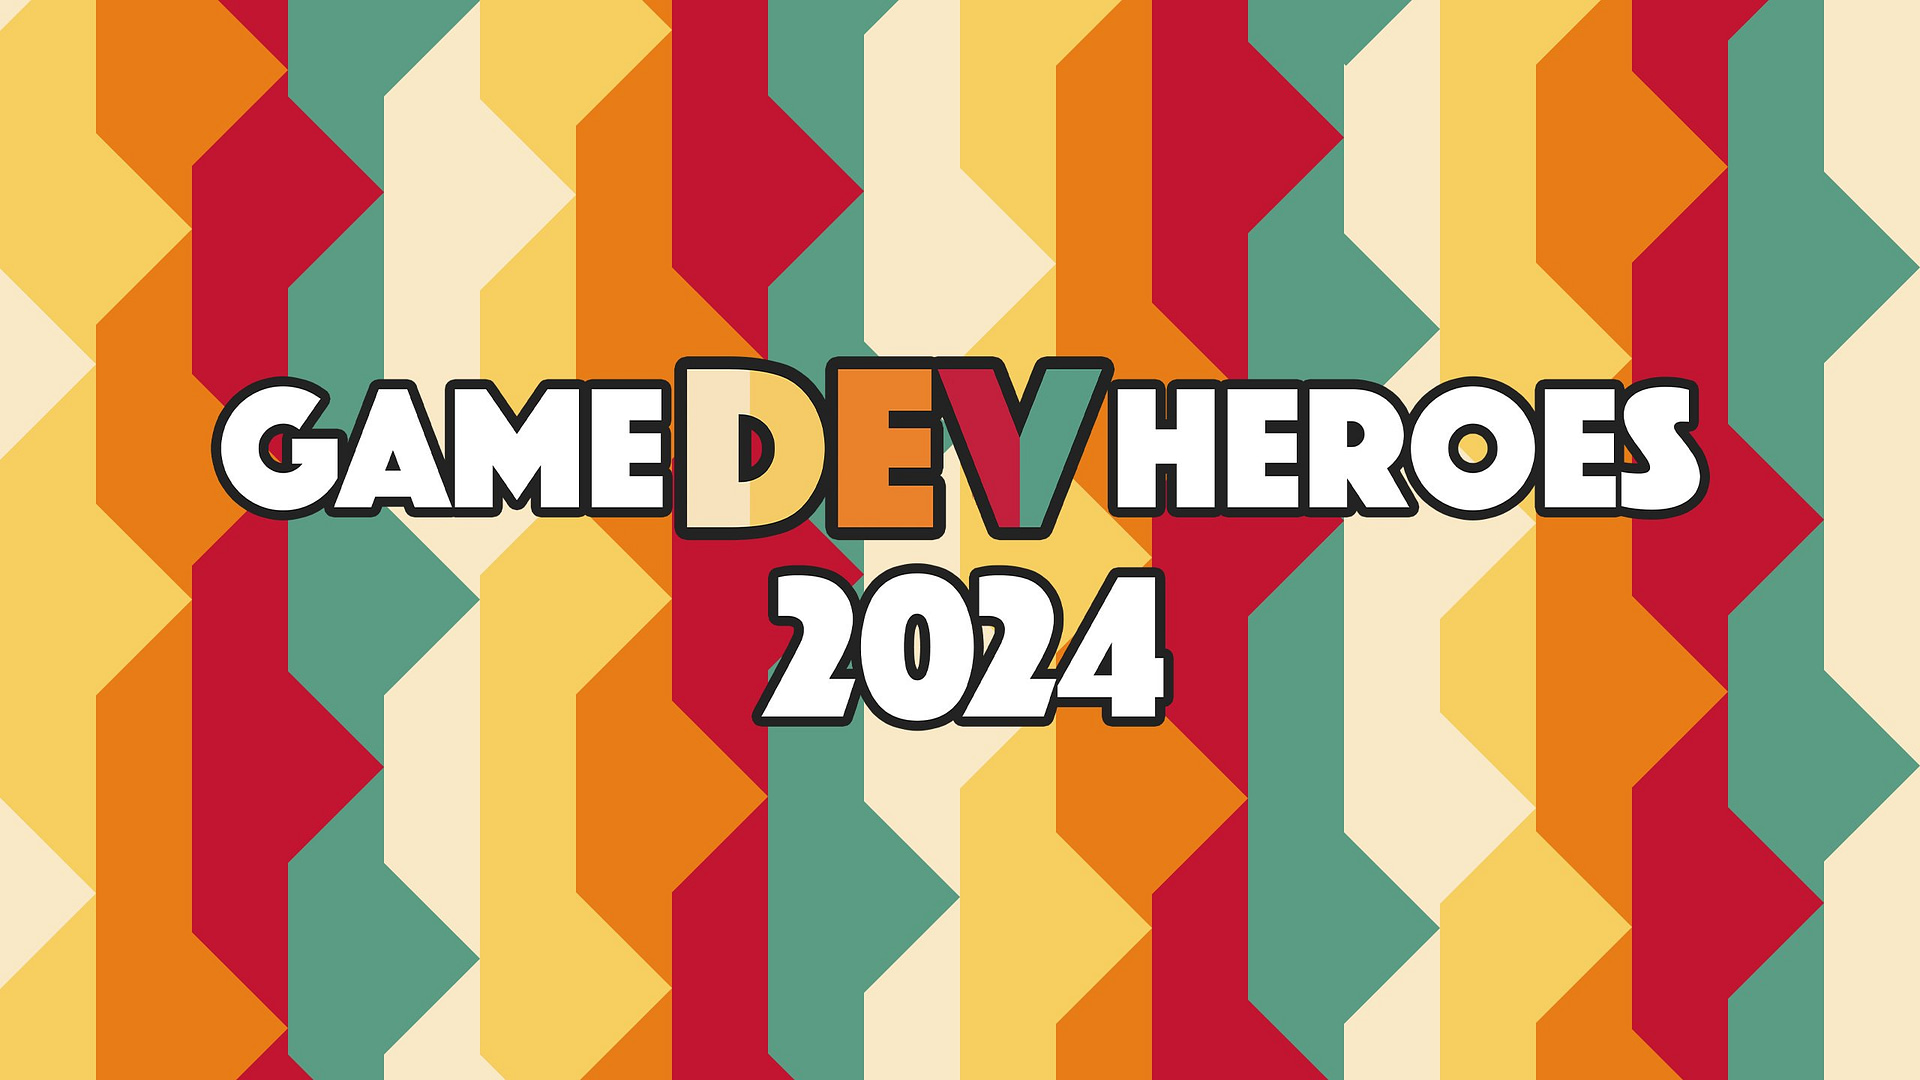 Sumo celebrates its Game Dev Hero nominees